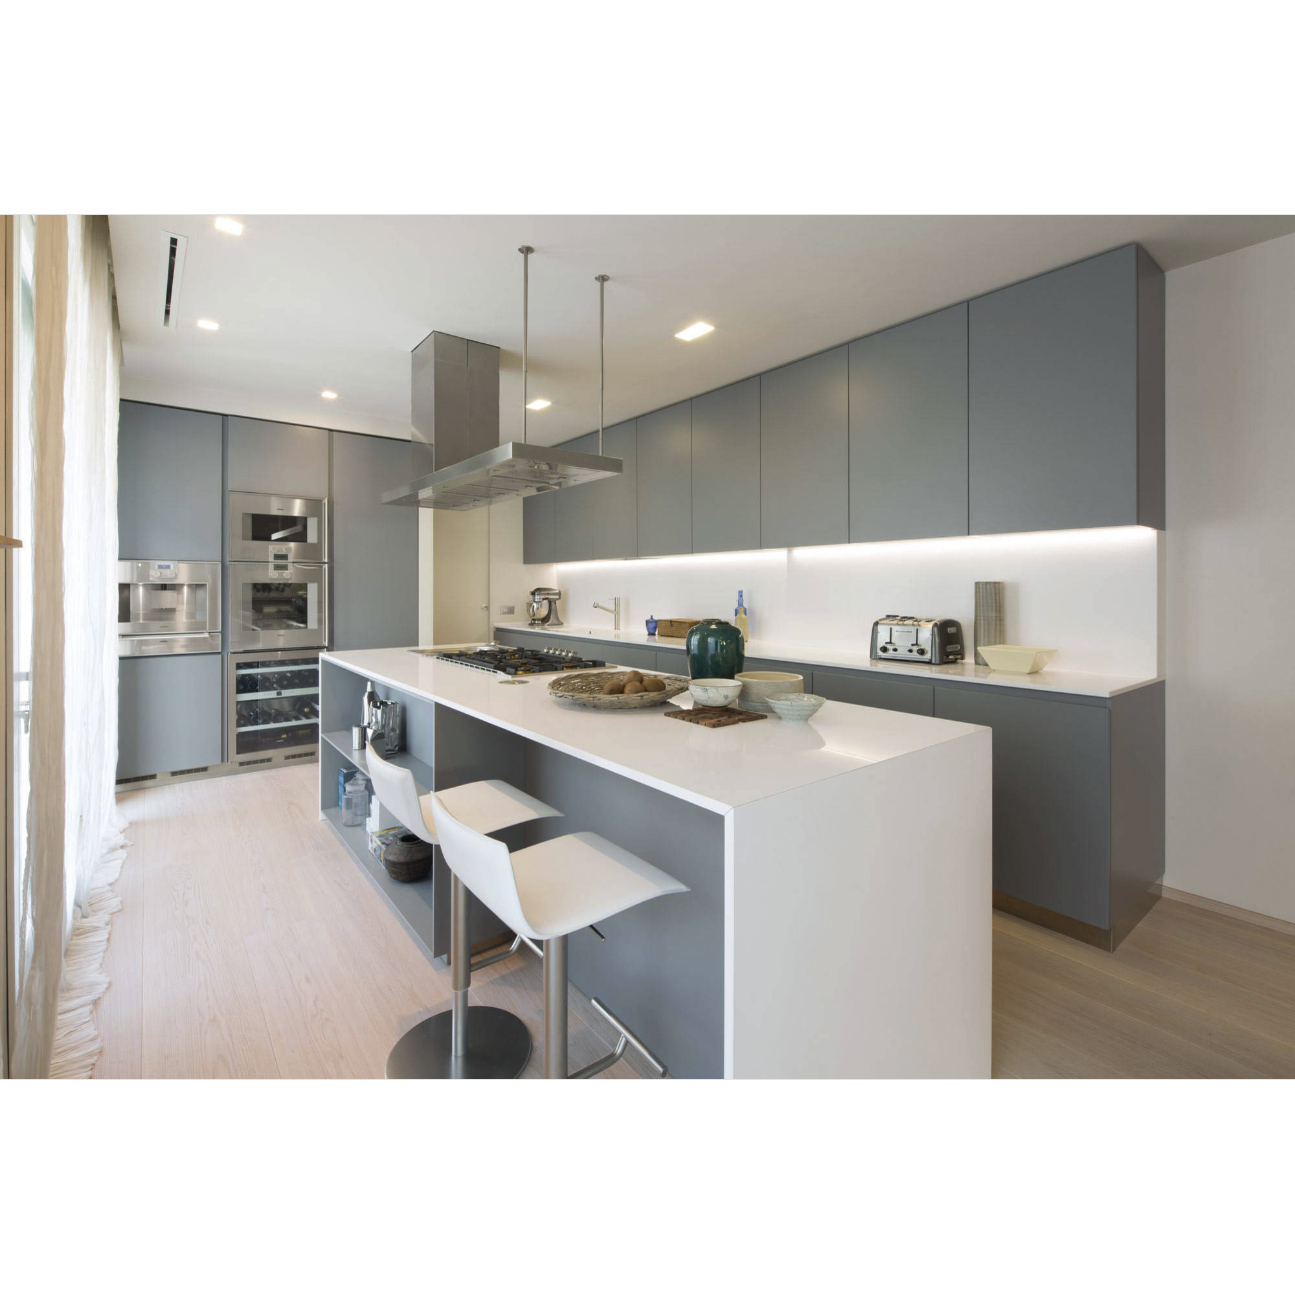 AisDecor new gray cabinets kitchen wholesale-2